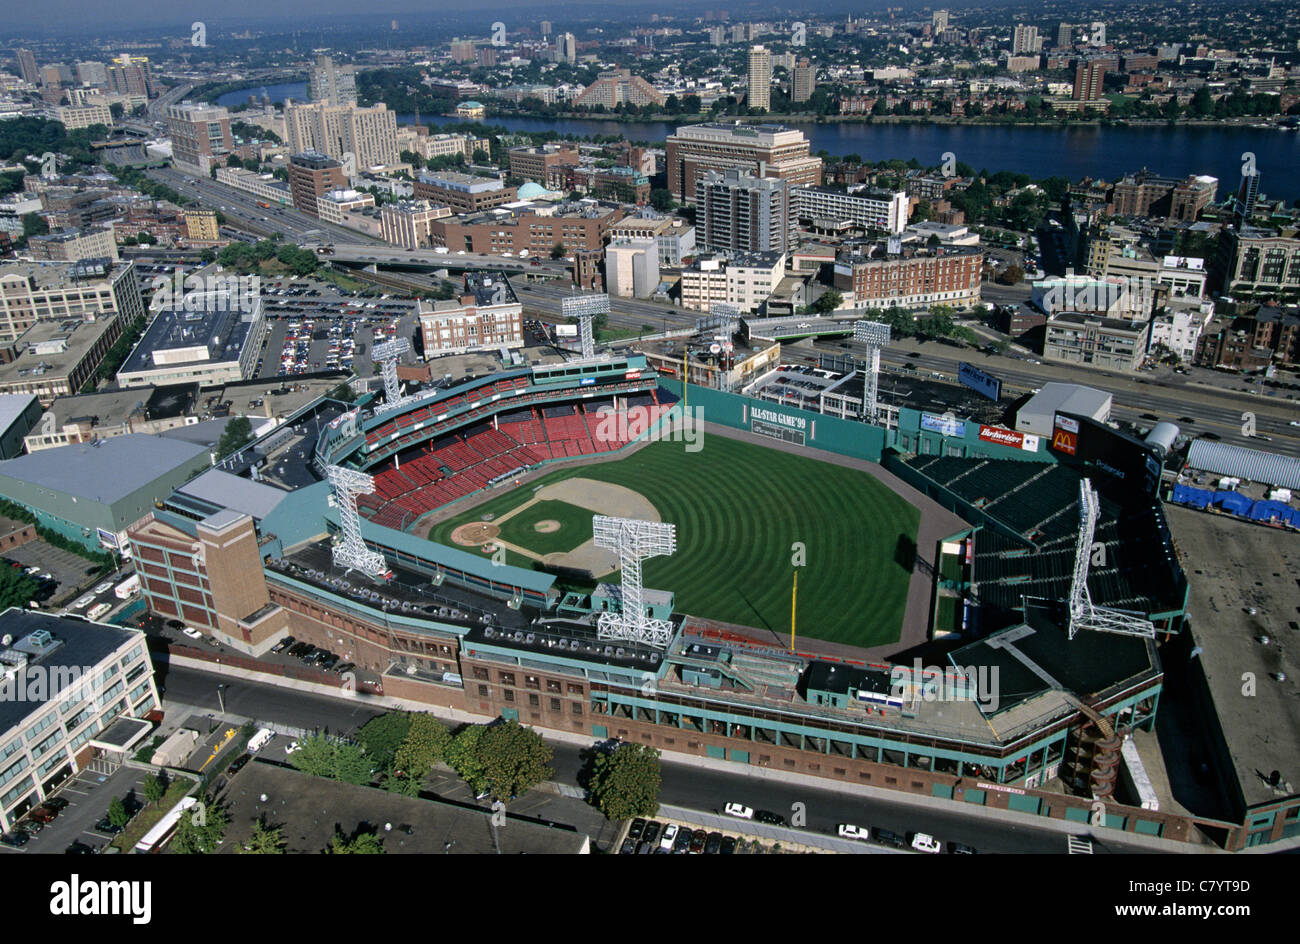 USA, Massachusetts, Boston, Fenway Park from the air Stock Photo